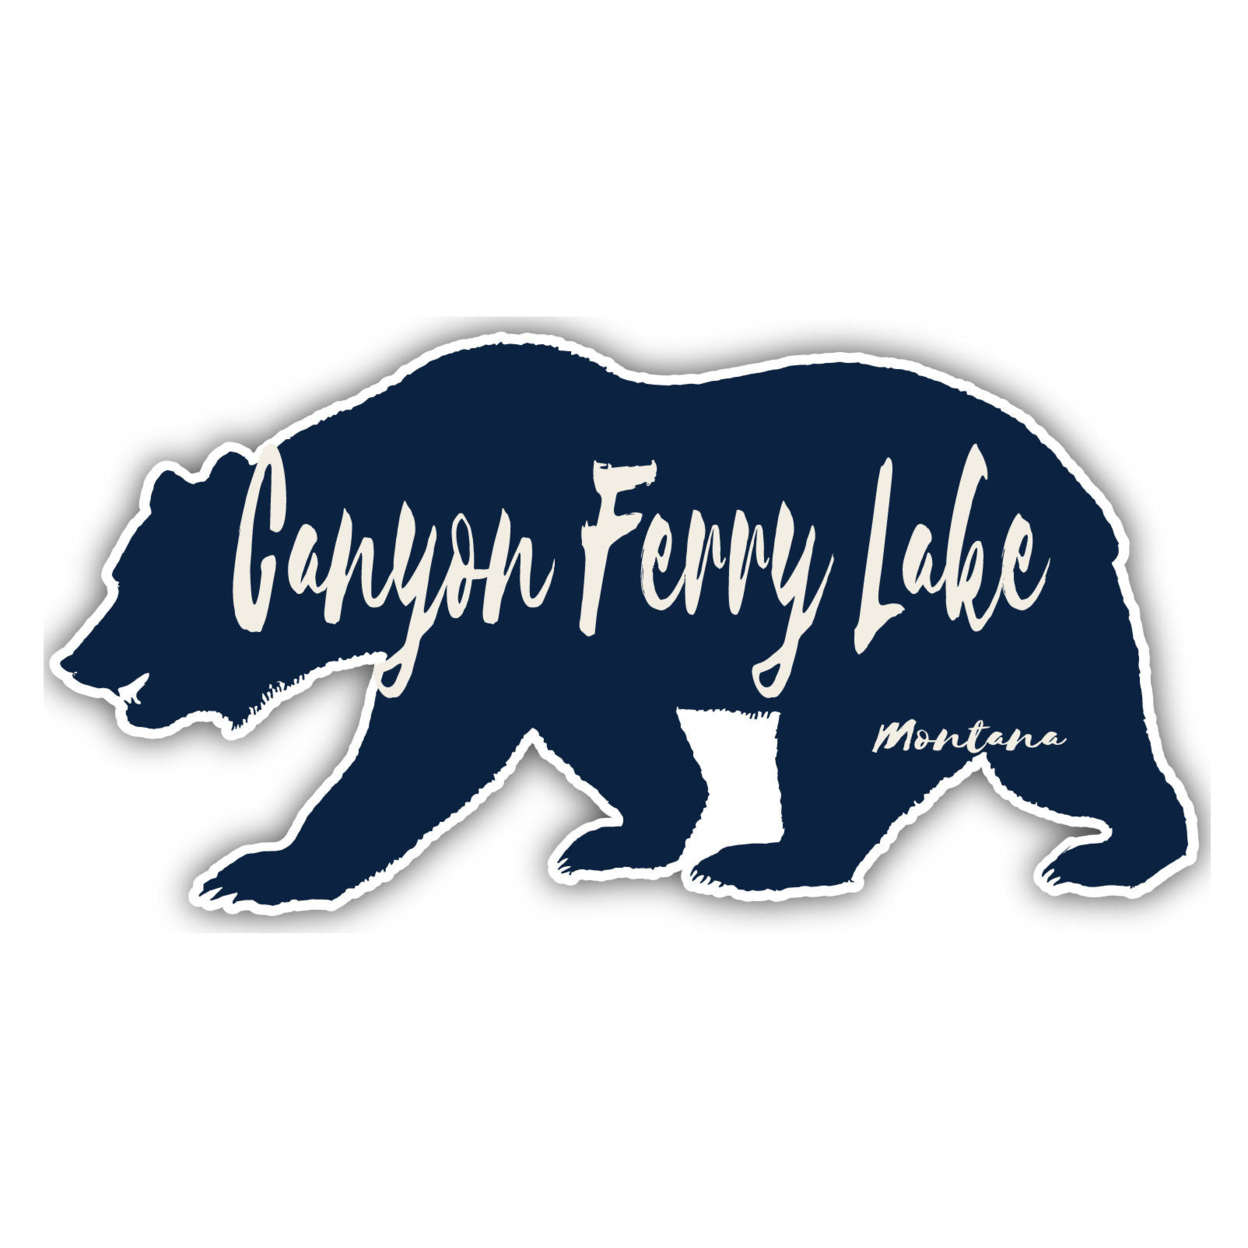 Canyon Ferry Lake Montana Souvenir Decorative Stickers (Choose Theme And Size) - Single Unit, 4-Inch, Bear